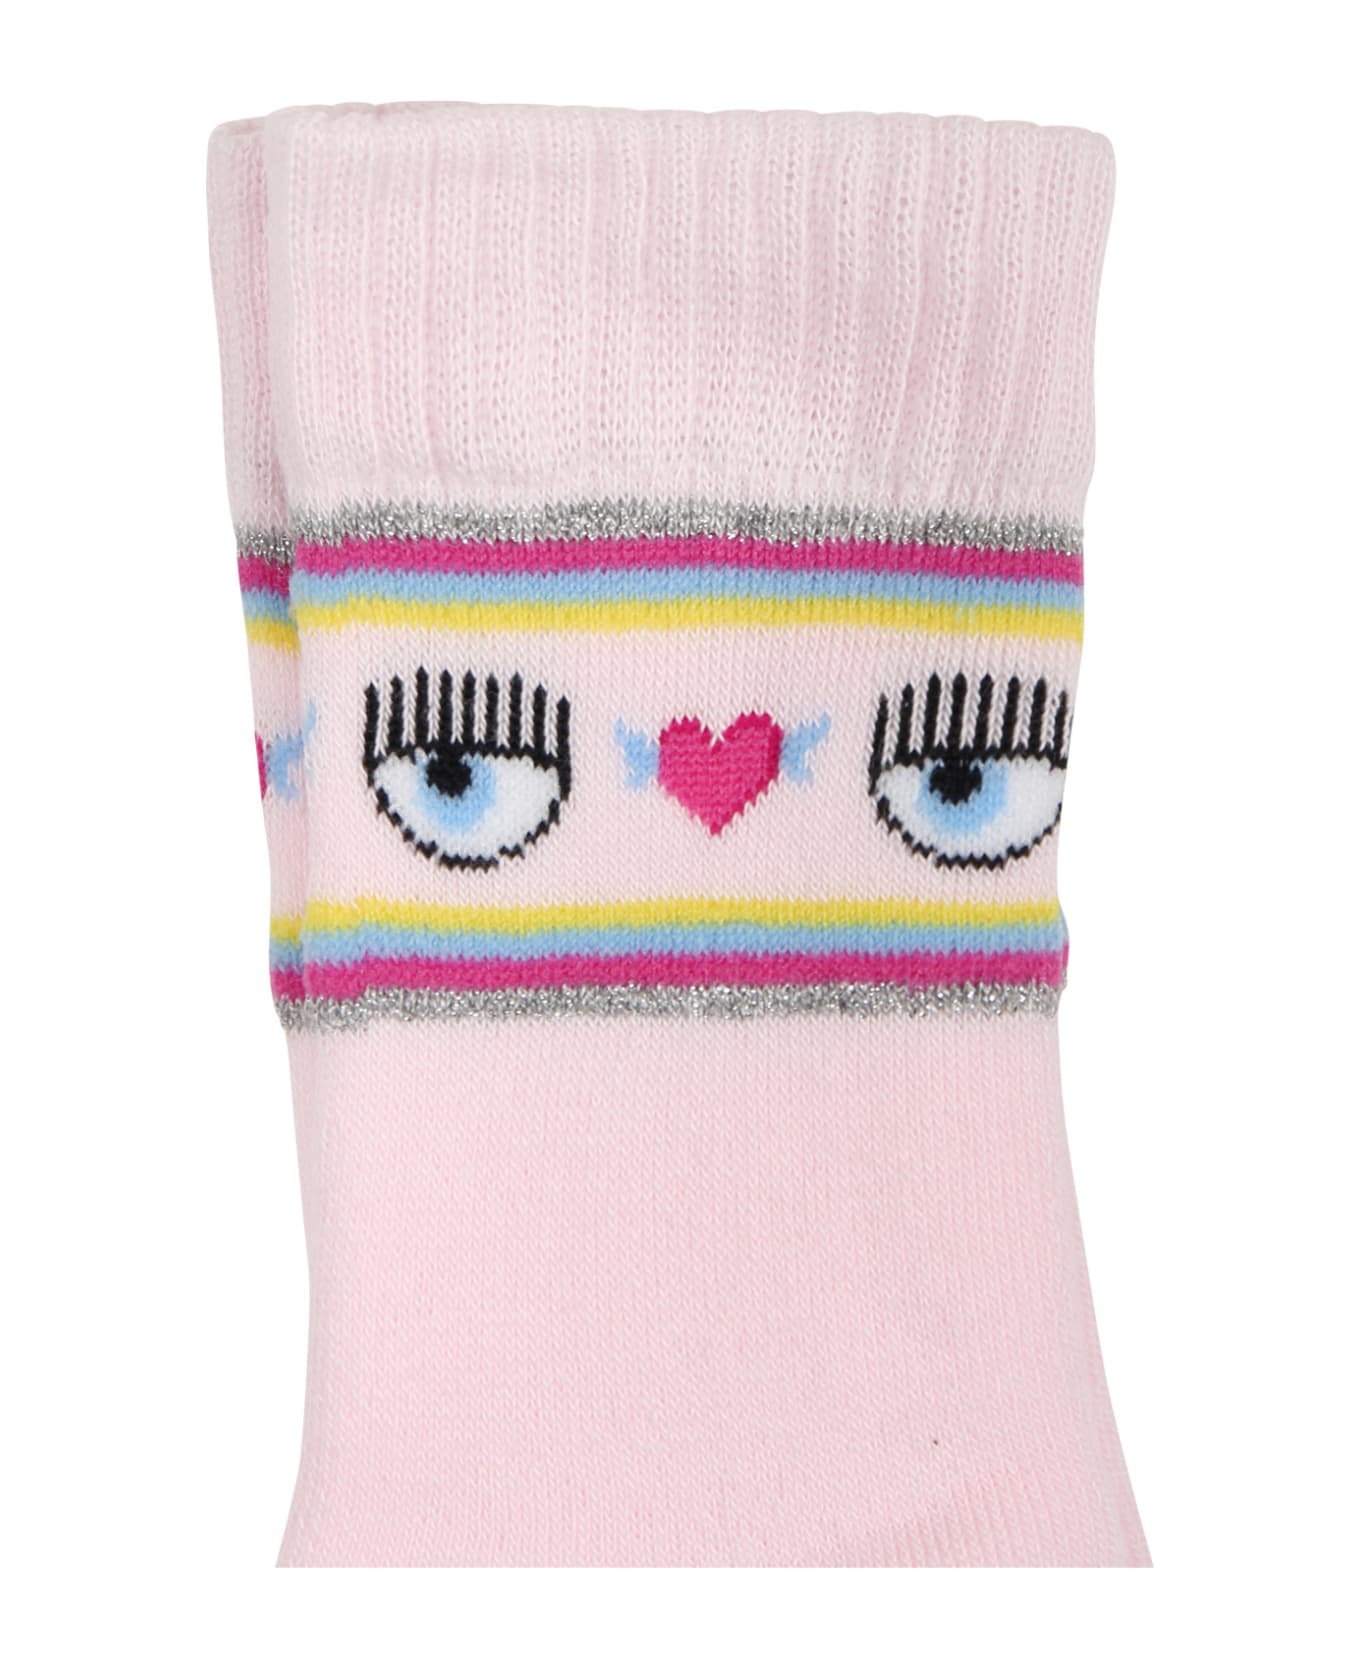 Chiara Ferragni Pink Socks For Girl With Flirting Eyes And Hearts - Pink アンダーウェア